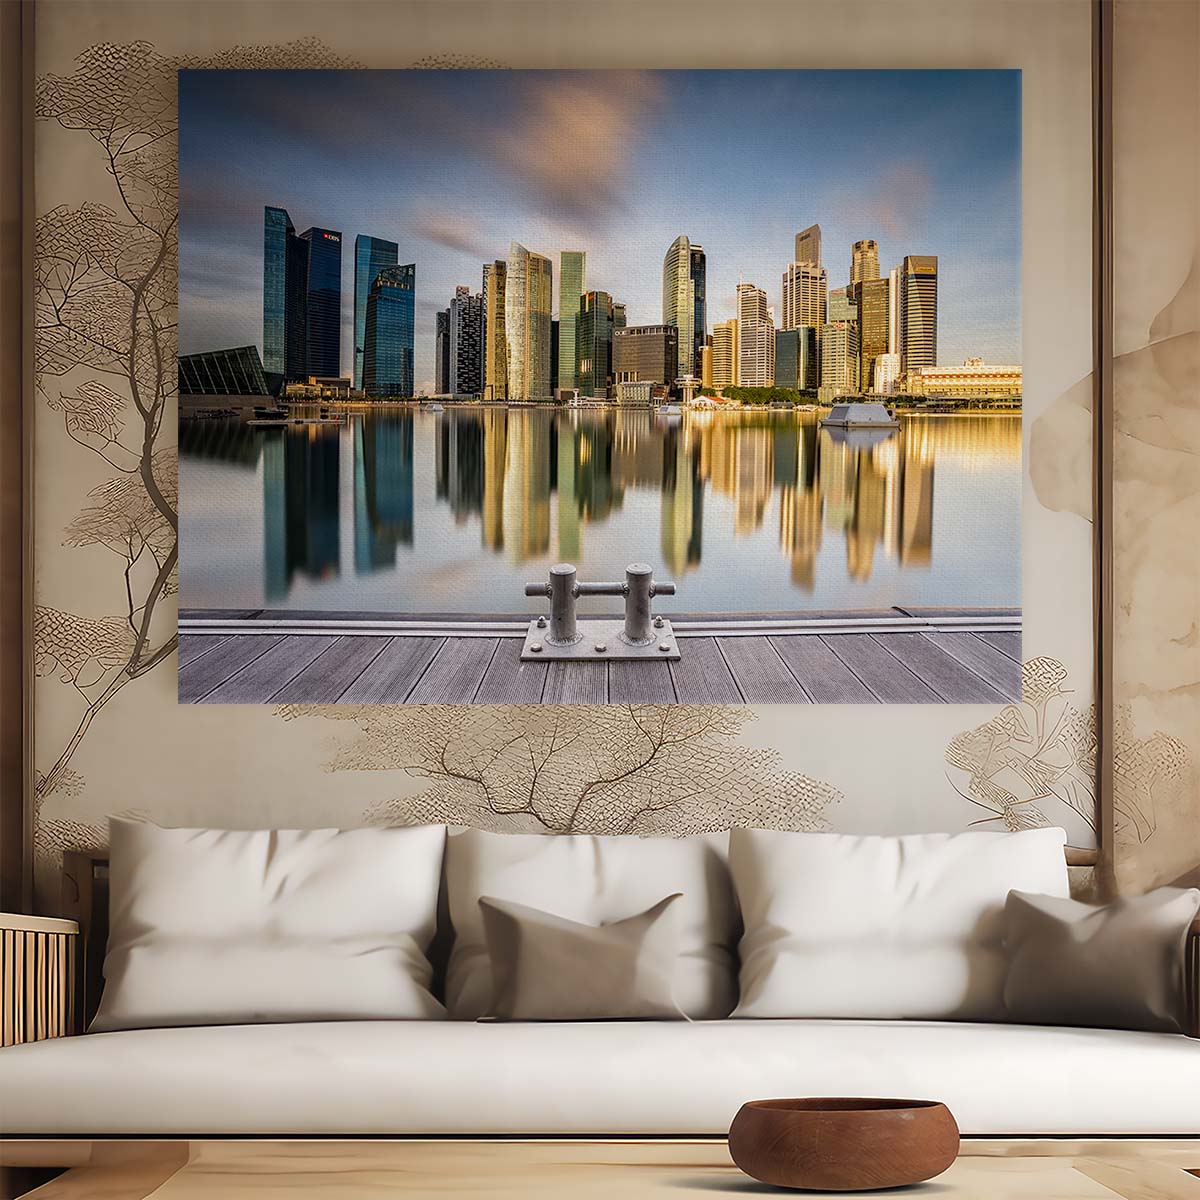 Singapore Sunrise Skyline Golden Marina Reflection Wall Art by Luxuriance Designs. Made in USA.